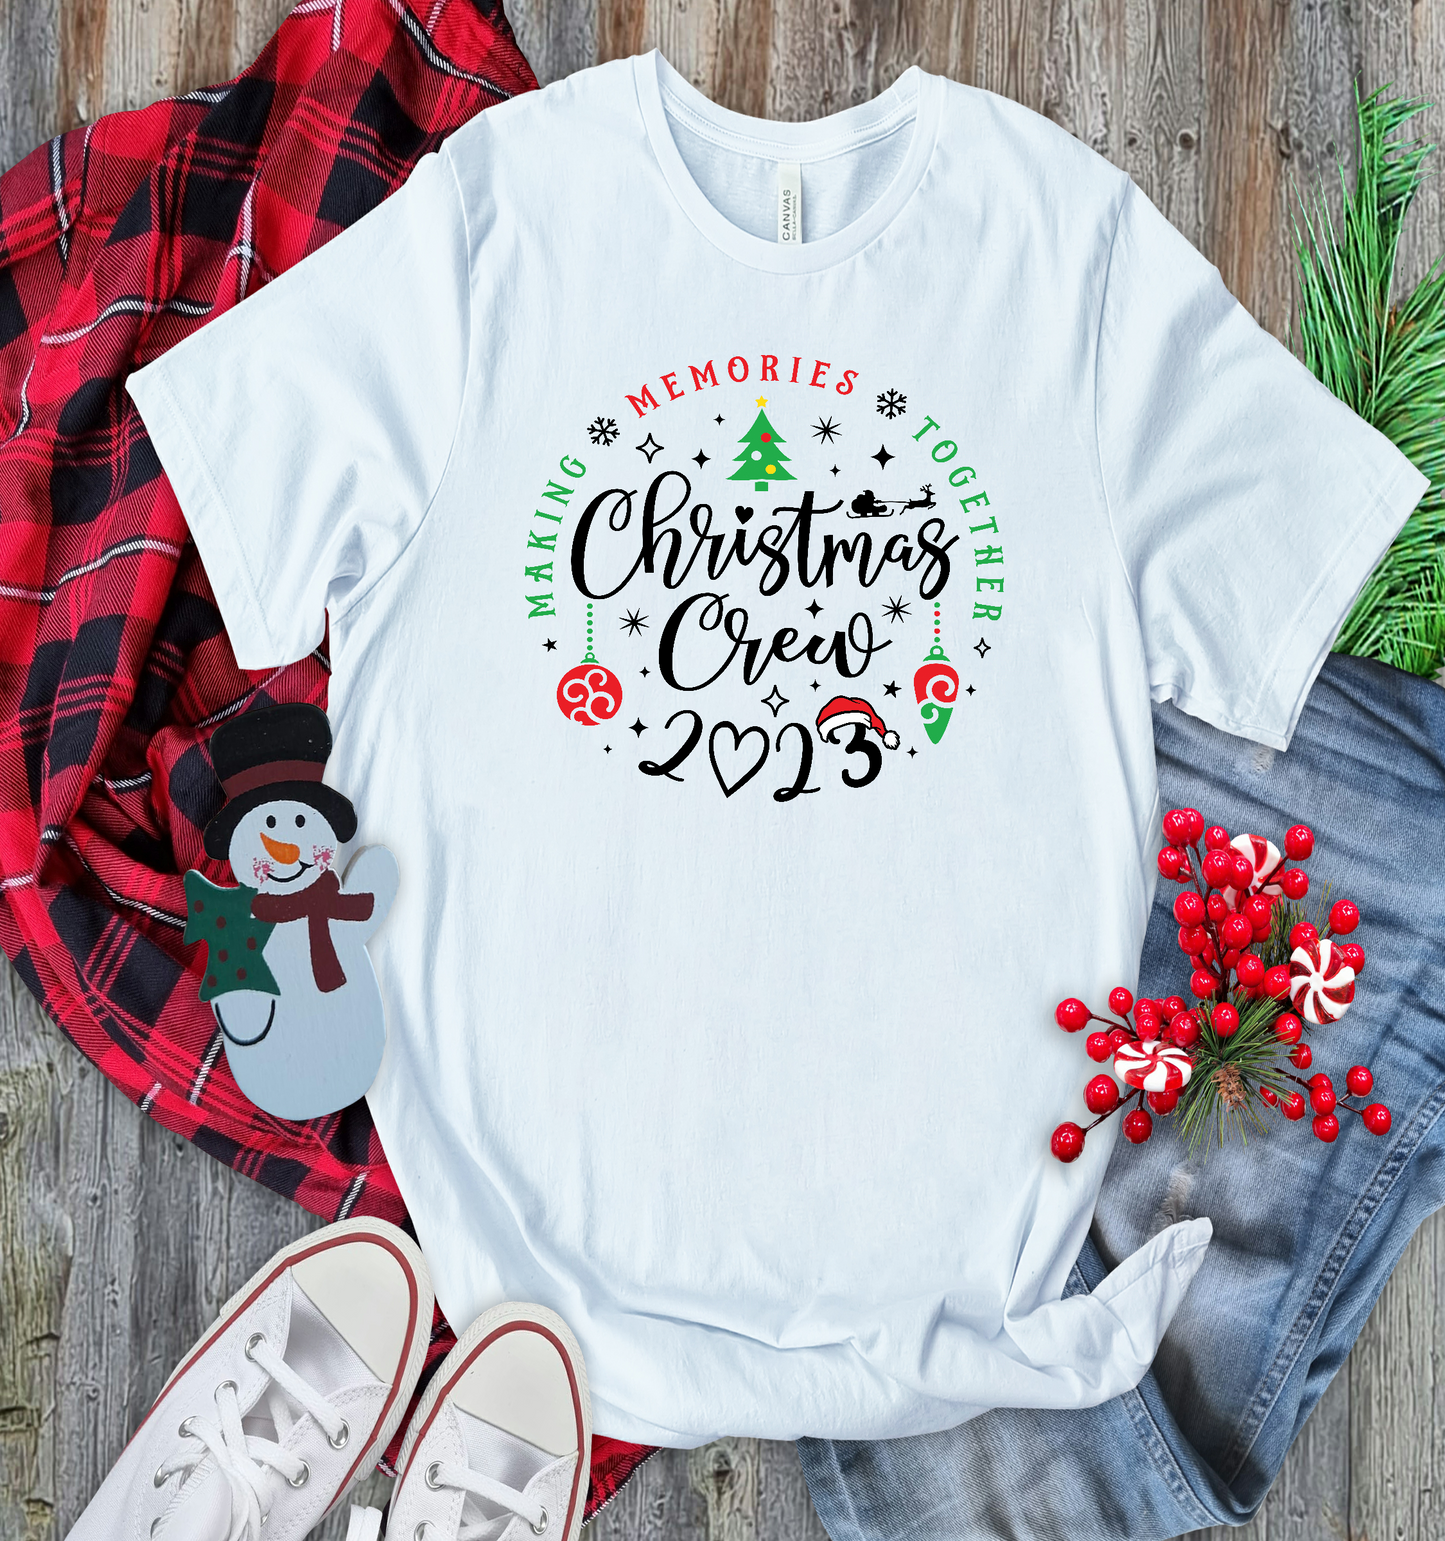 Christmas Crew Shirts Making memories together